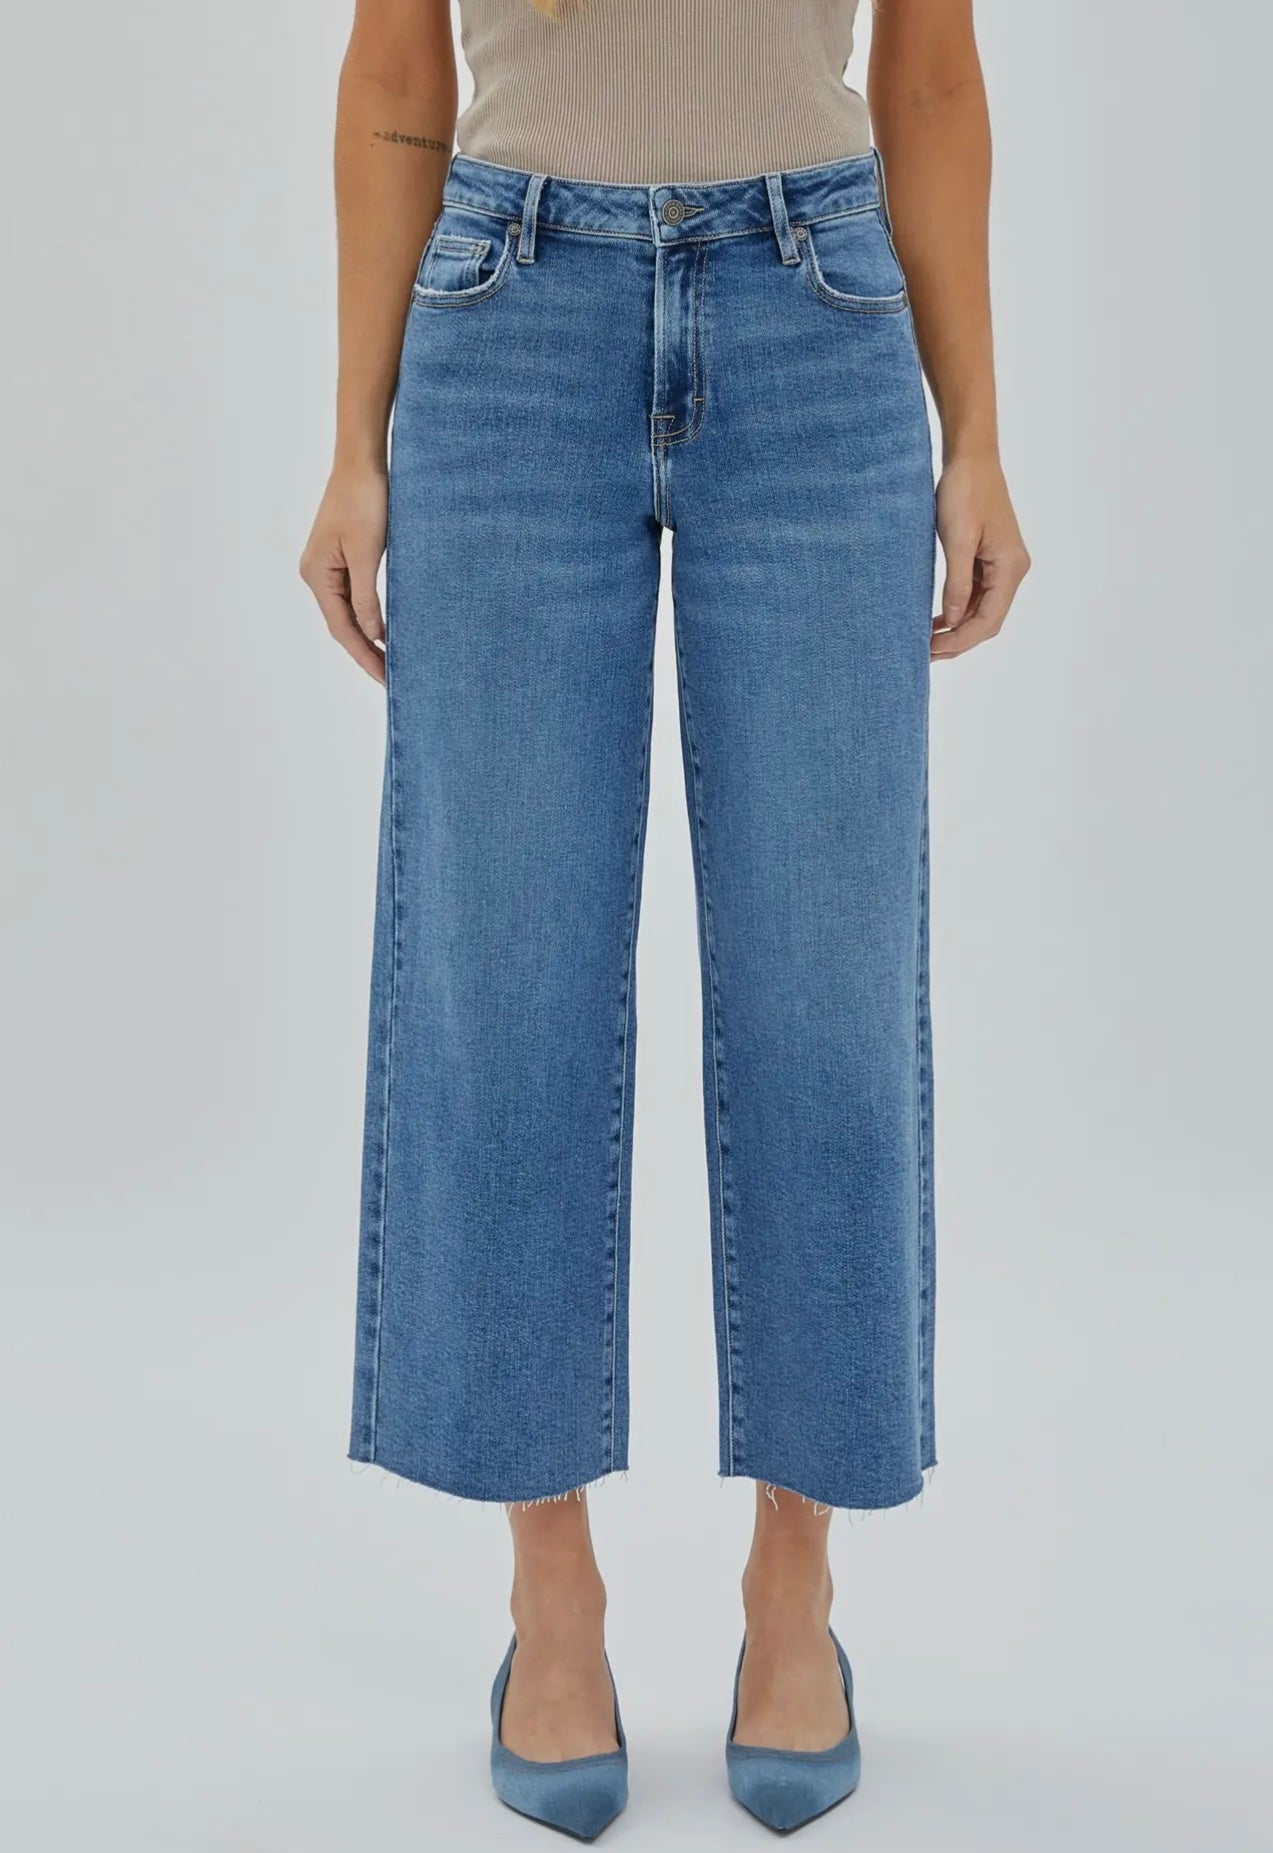 & and Hale – Denim Jeans Shop Kate